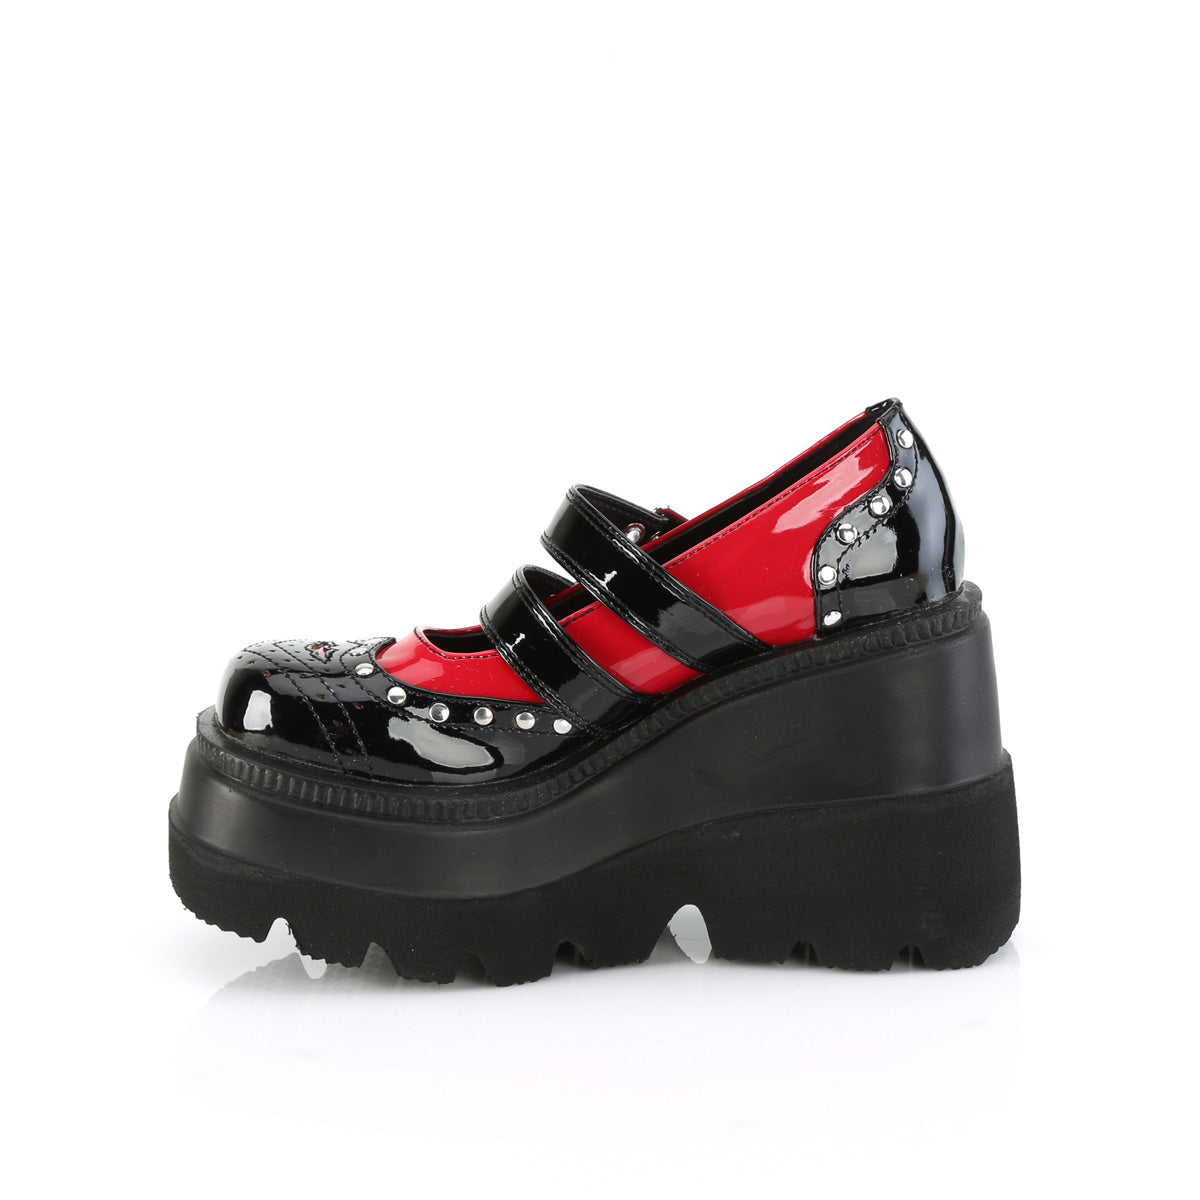 SHAKER-27 Demonia Black-Red Patent Women's Heels & Platform Shoes [Demonia Cult Alternative Footwear]